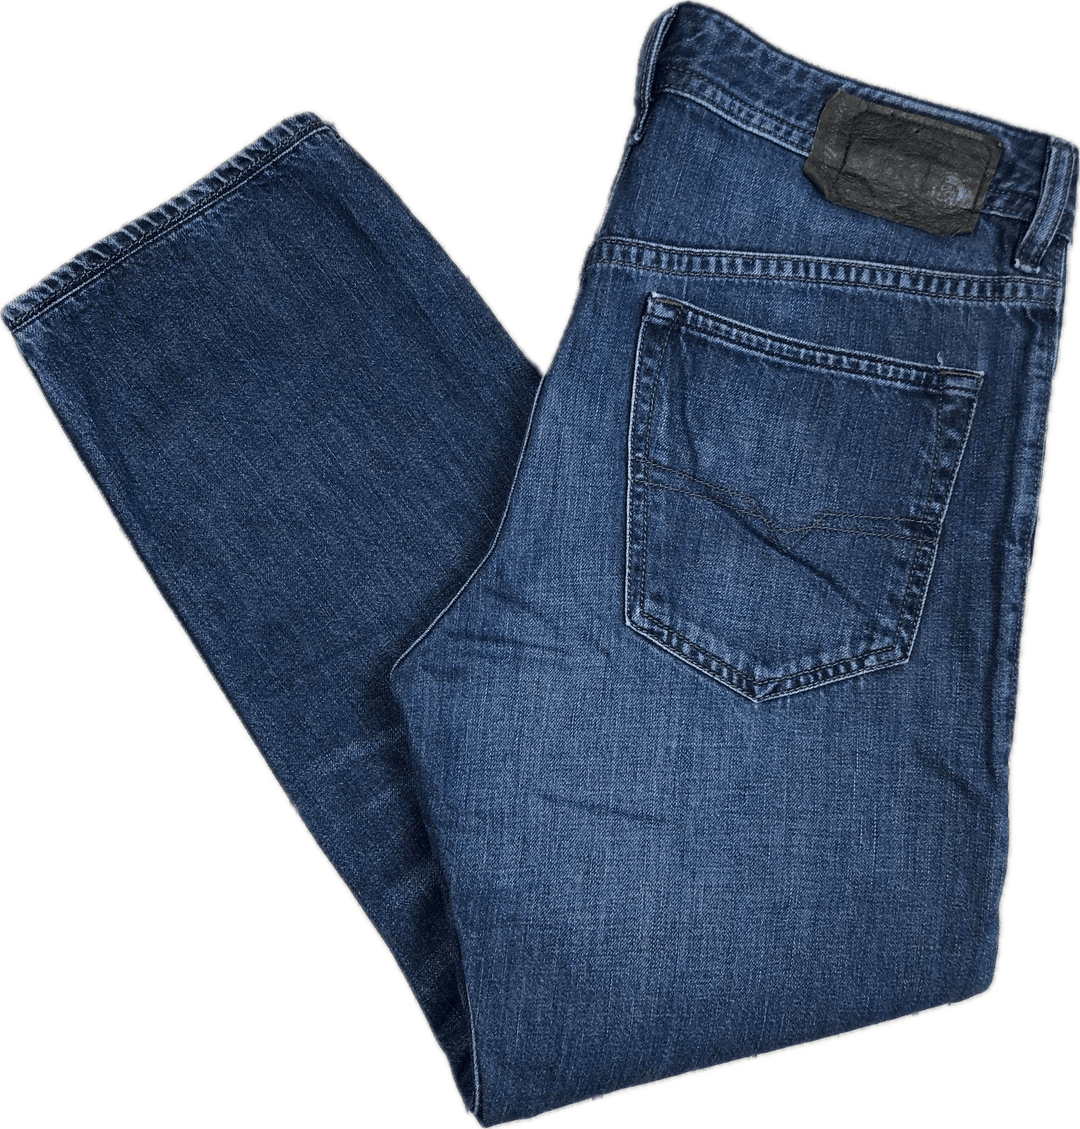 Diesel Mens 'Buster' Slim Tapered Jeans - Size 31 Short - Jean Pool